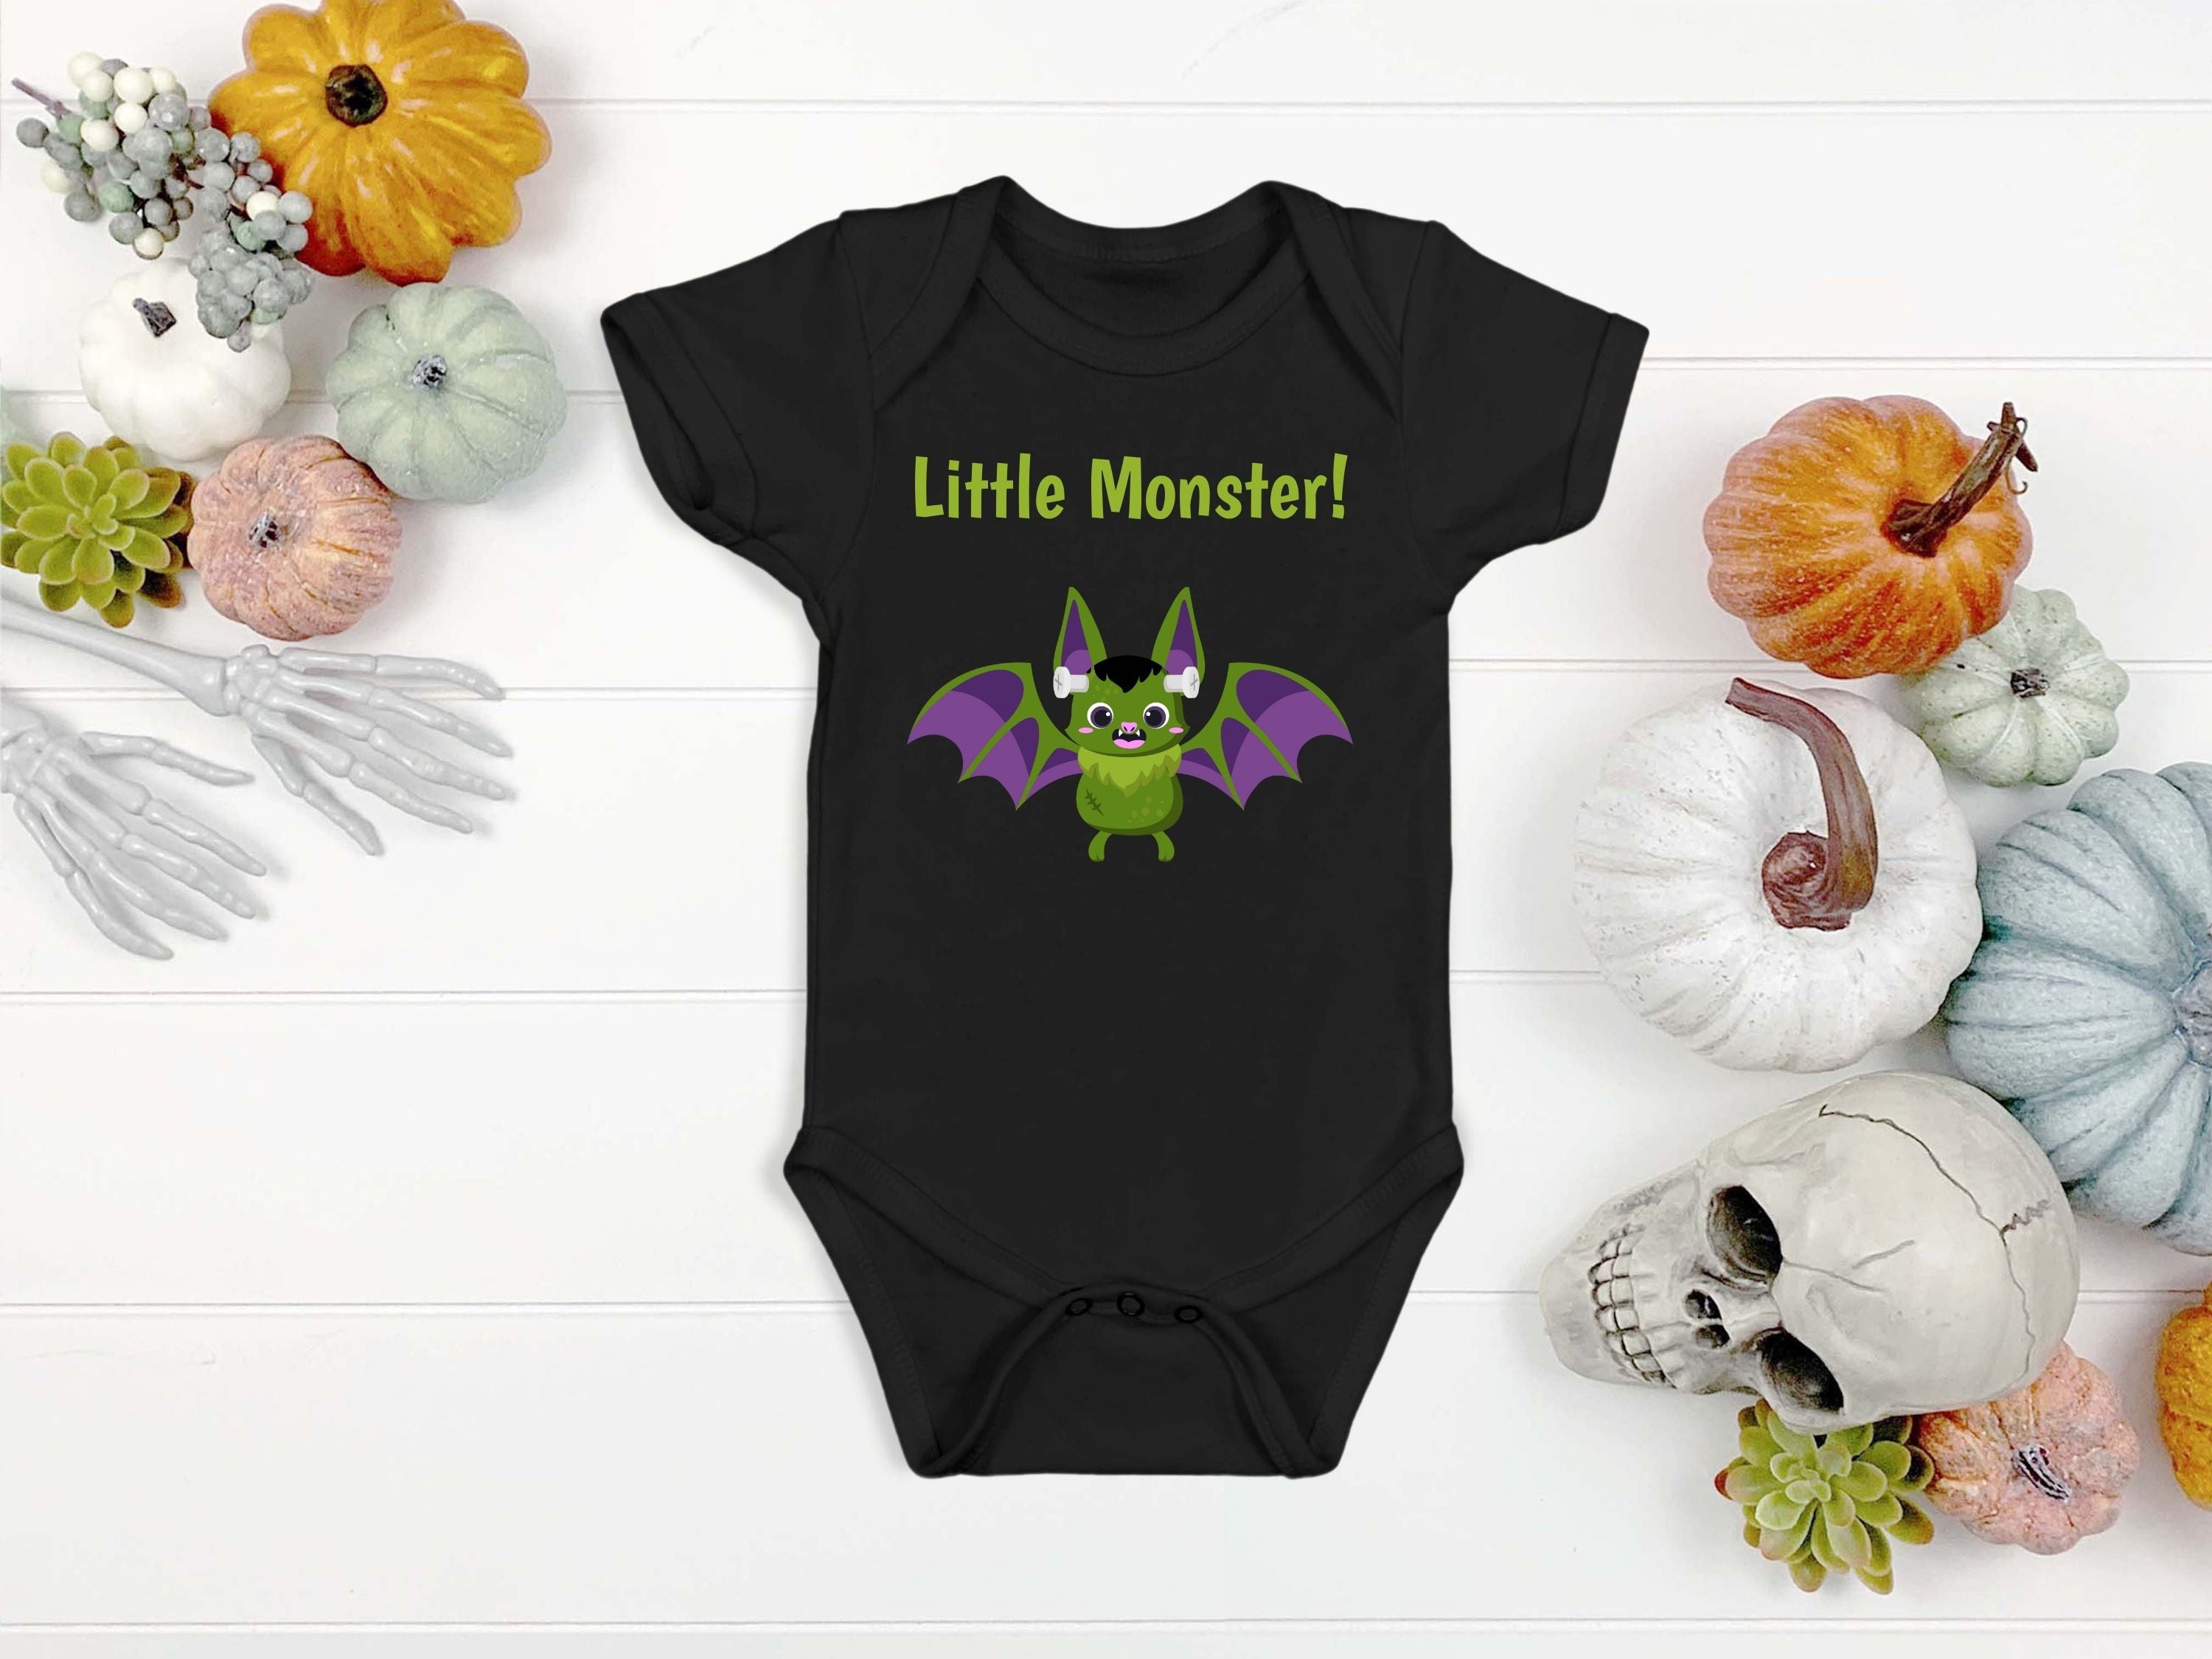 Little Monster! Halloween Baby short sleeve one piece onesie babygrow bodysuit